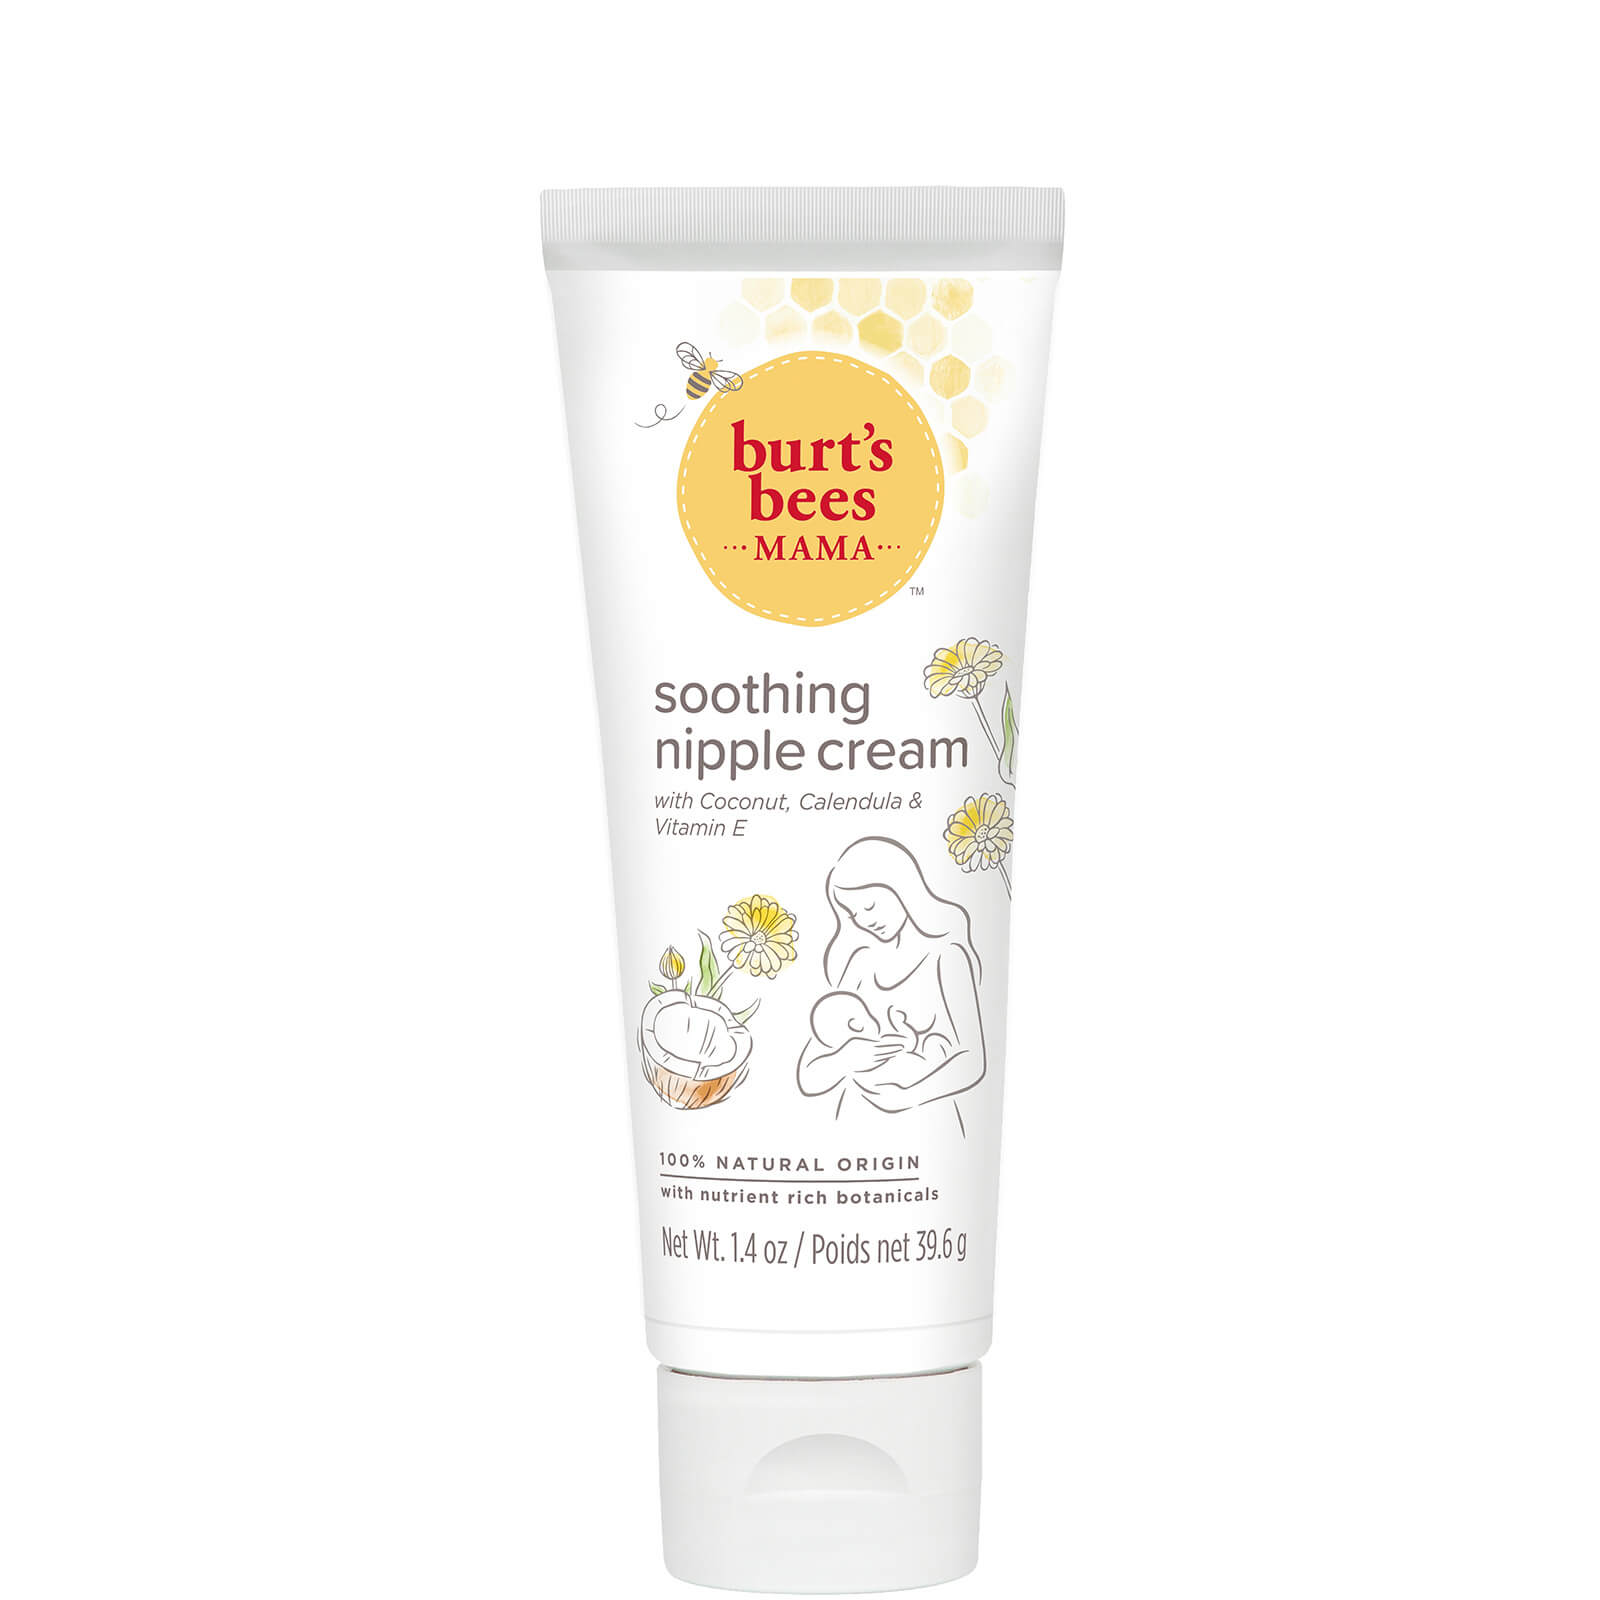 Burt’s Bees Mama Soothing Nipple Cream with Coconut, Calendula and Vitamin E lookfantastic.com imagine